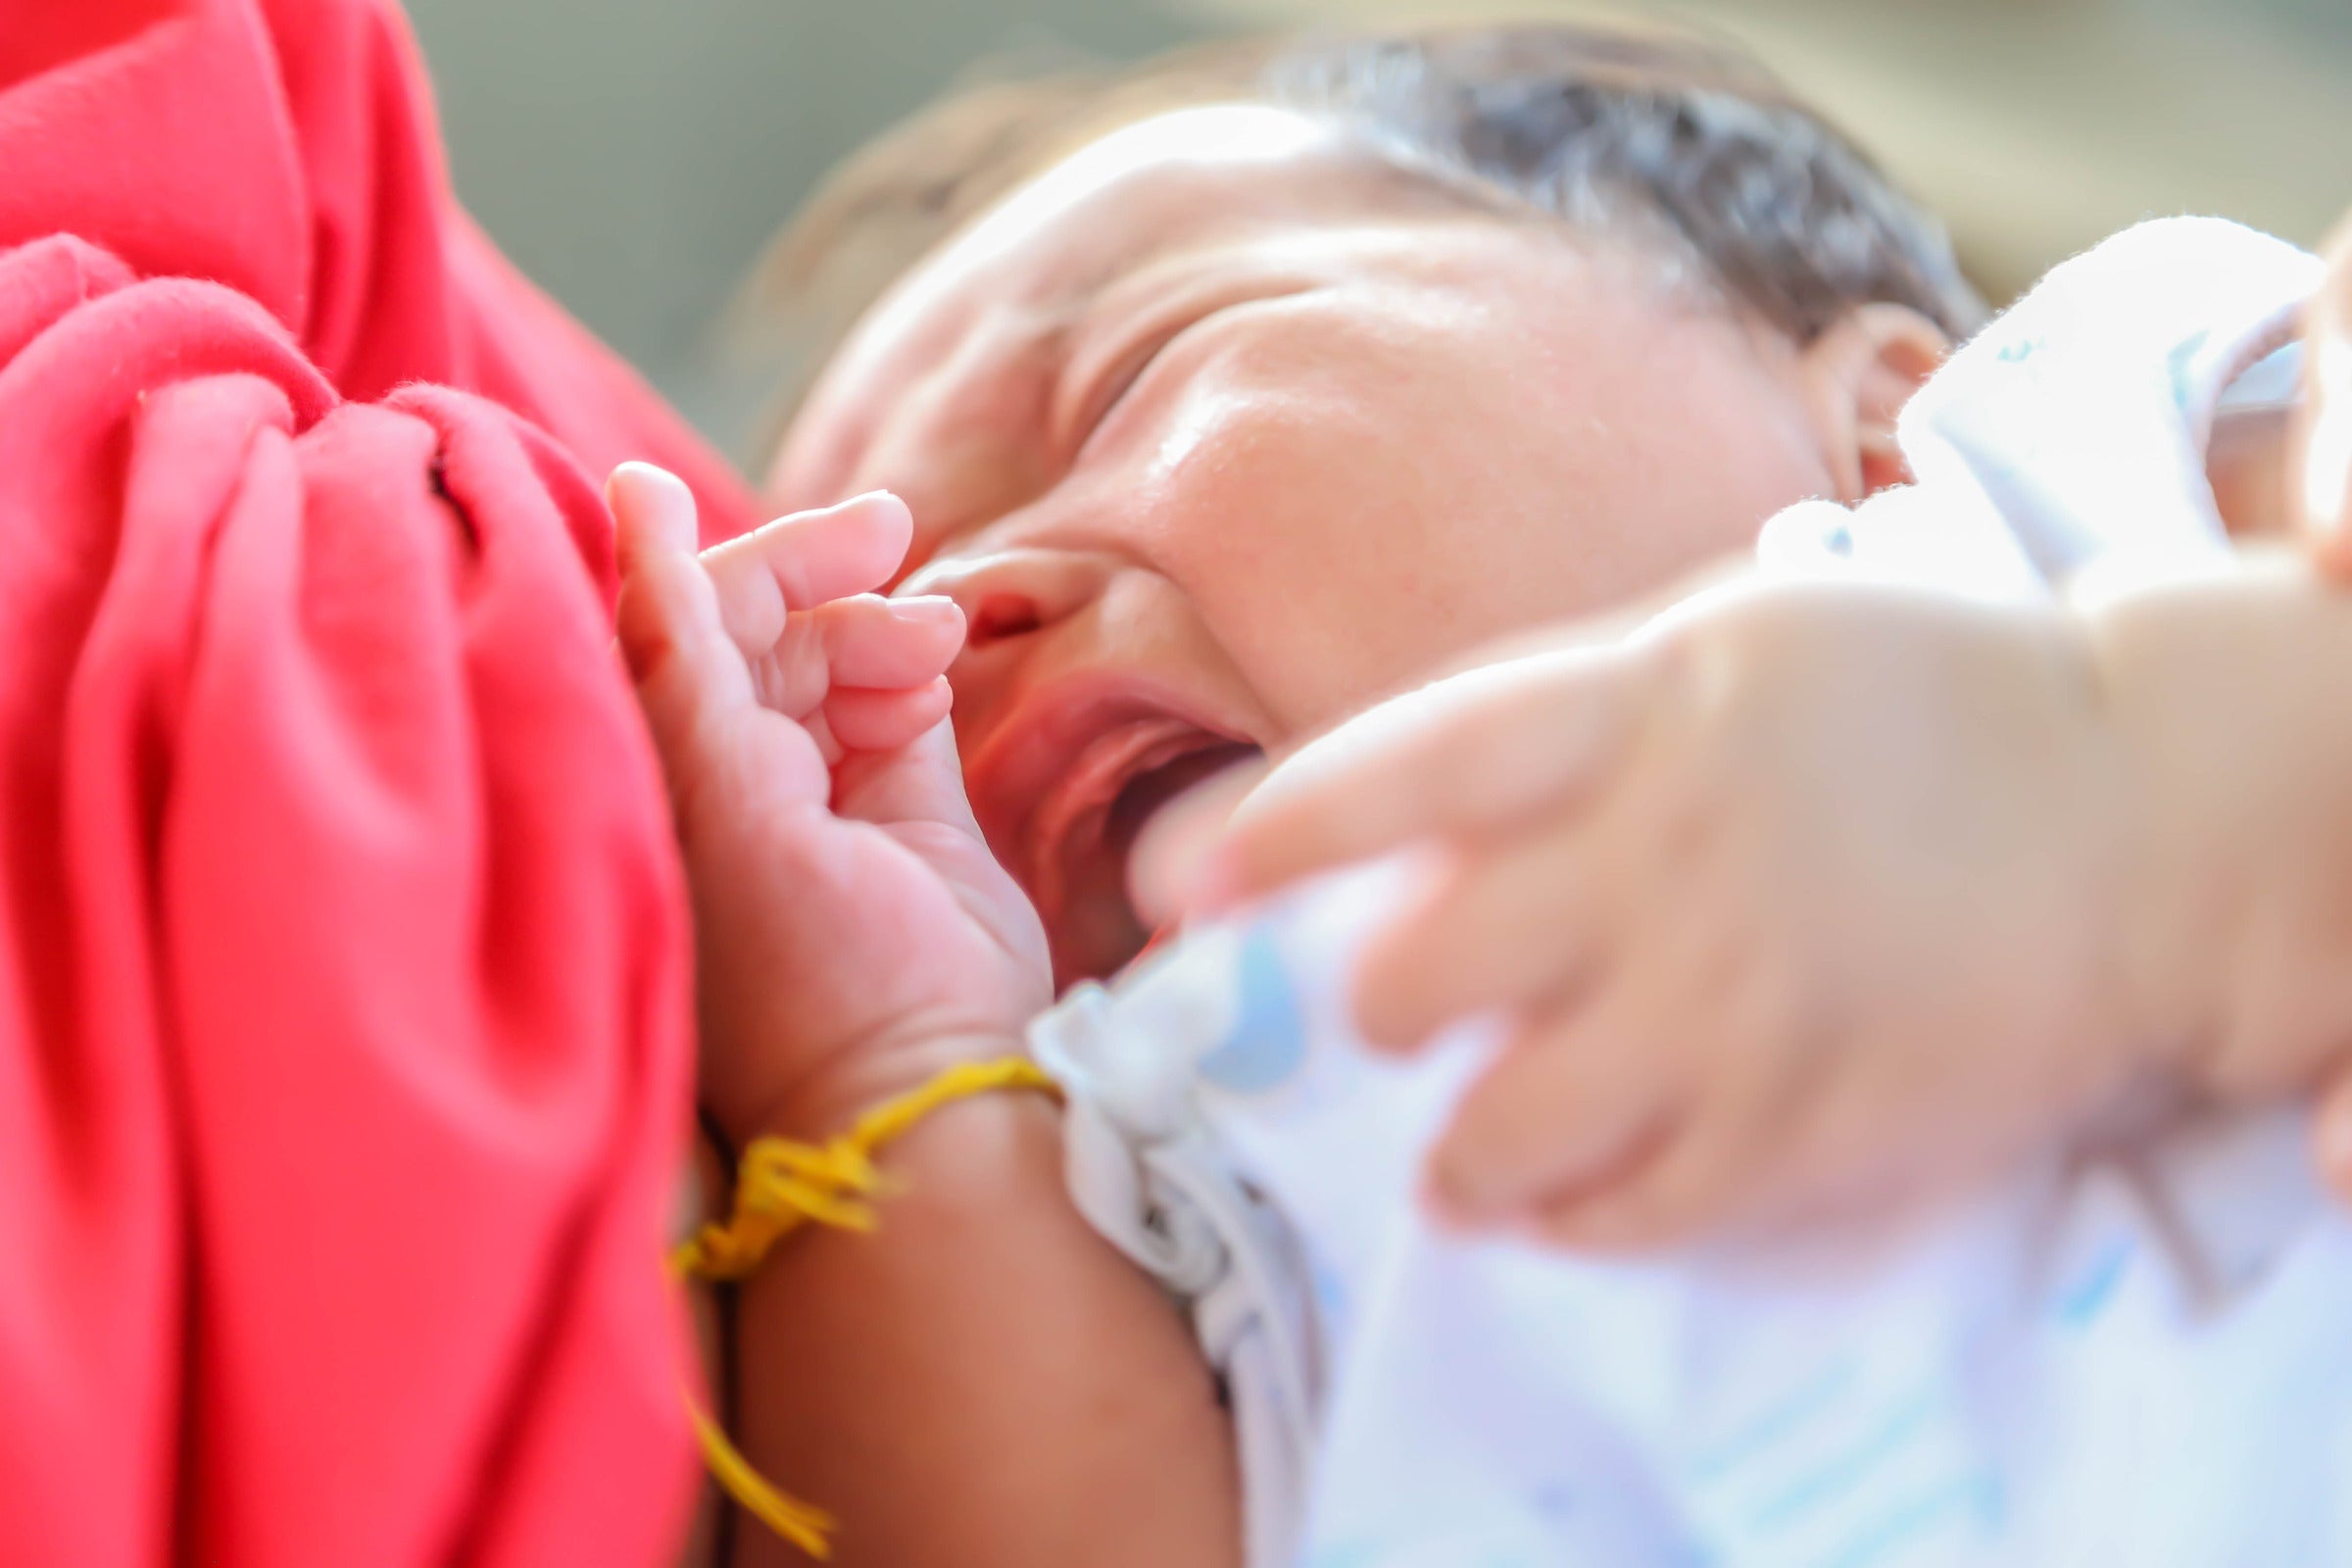 Nipple Pierced While Breastfeeding: 4 Risks